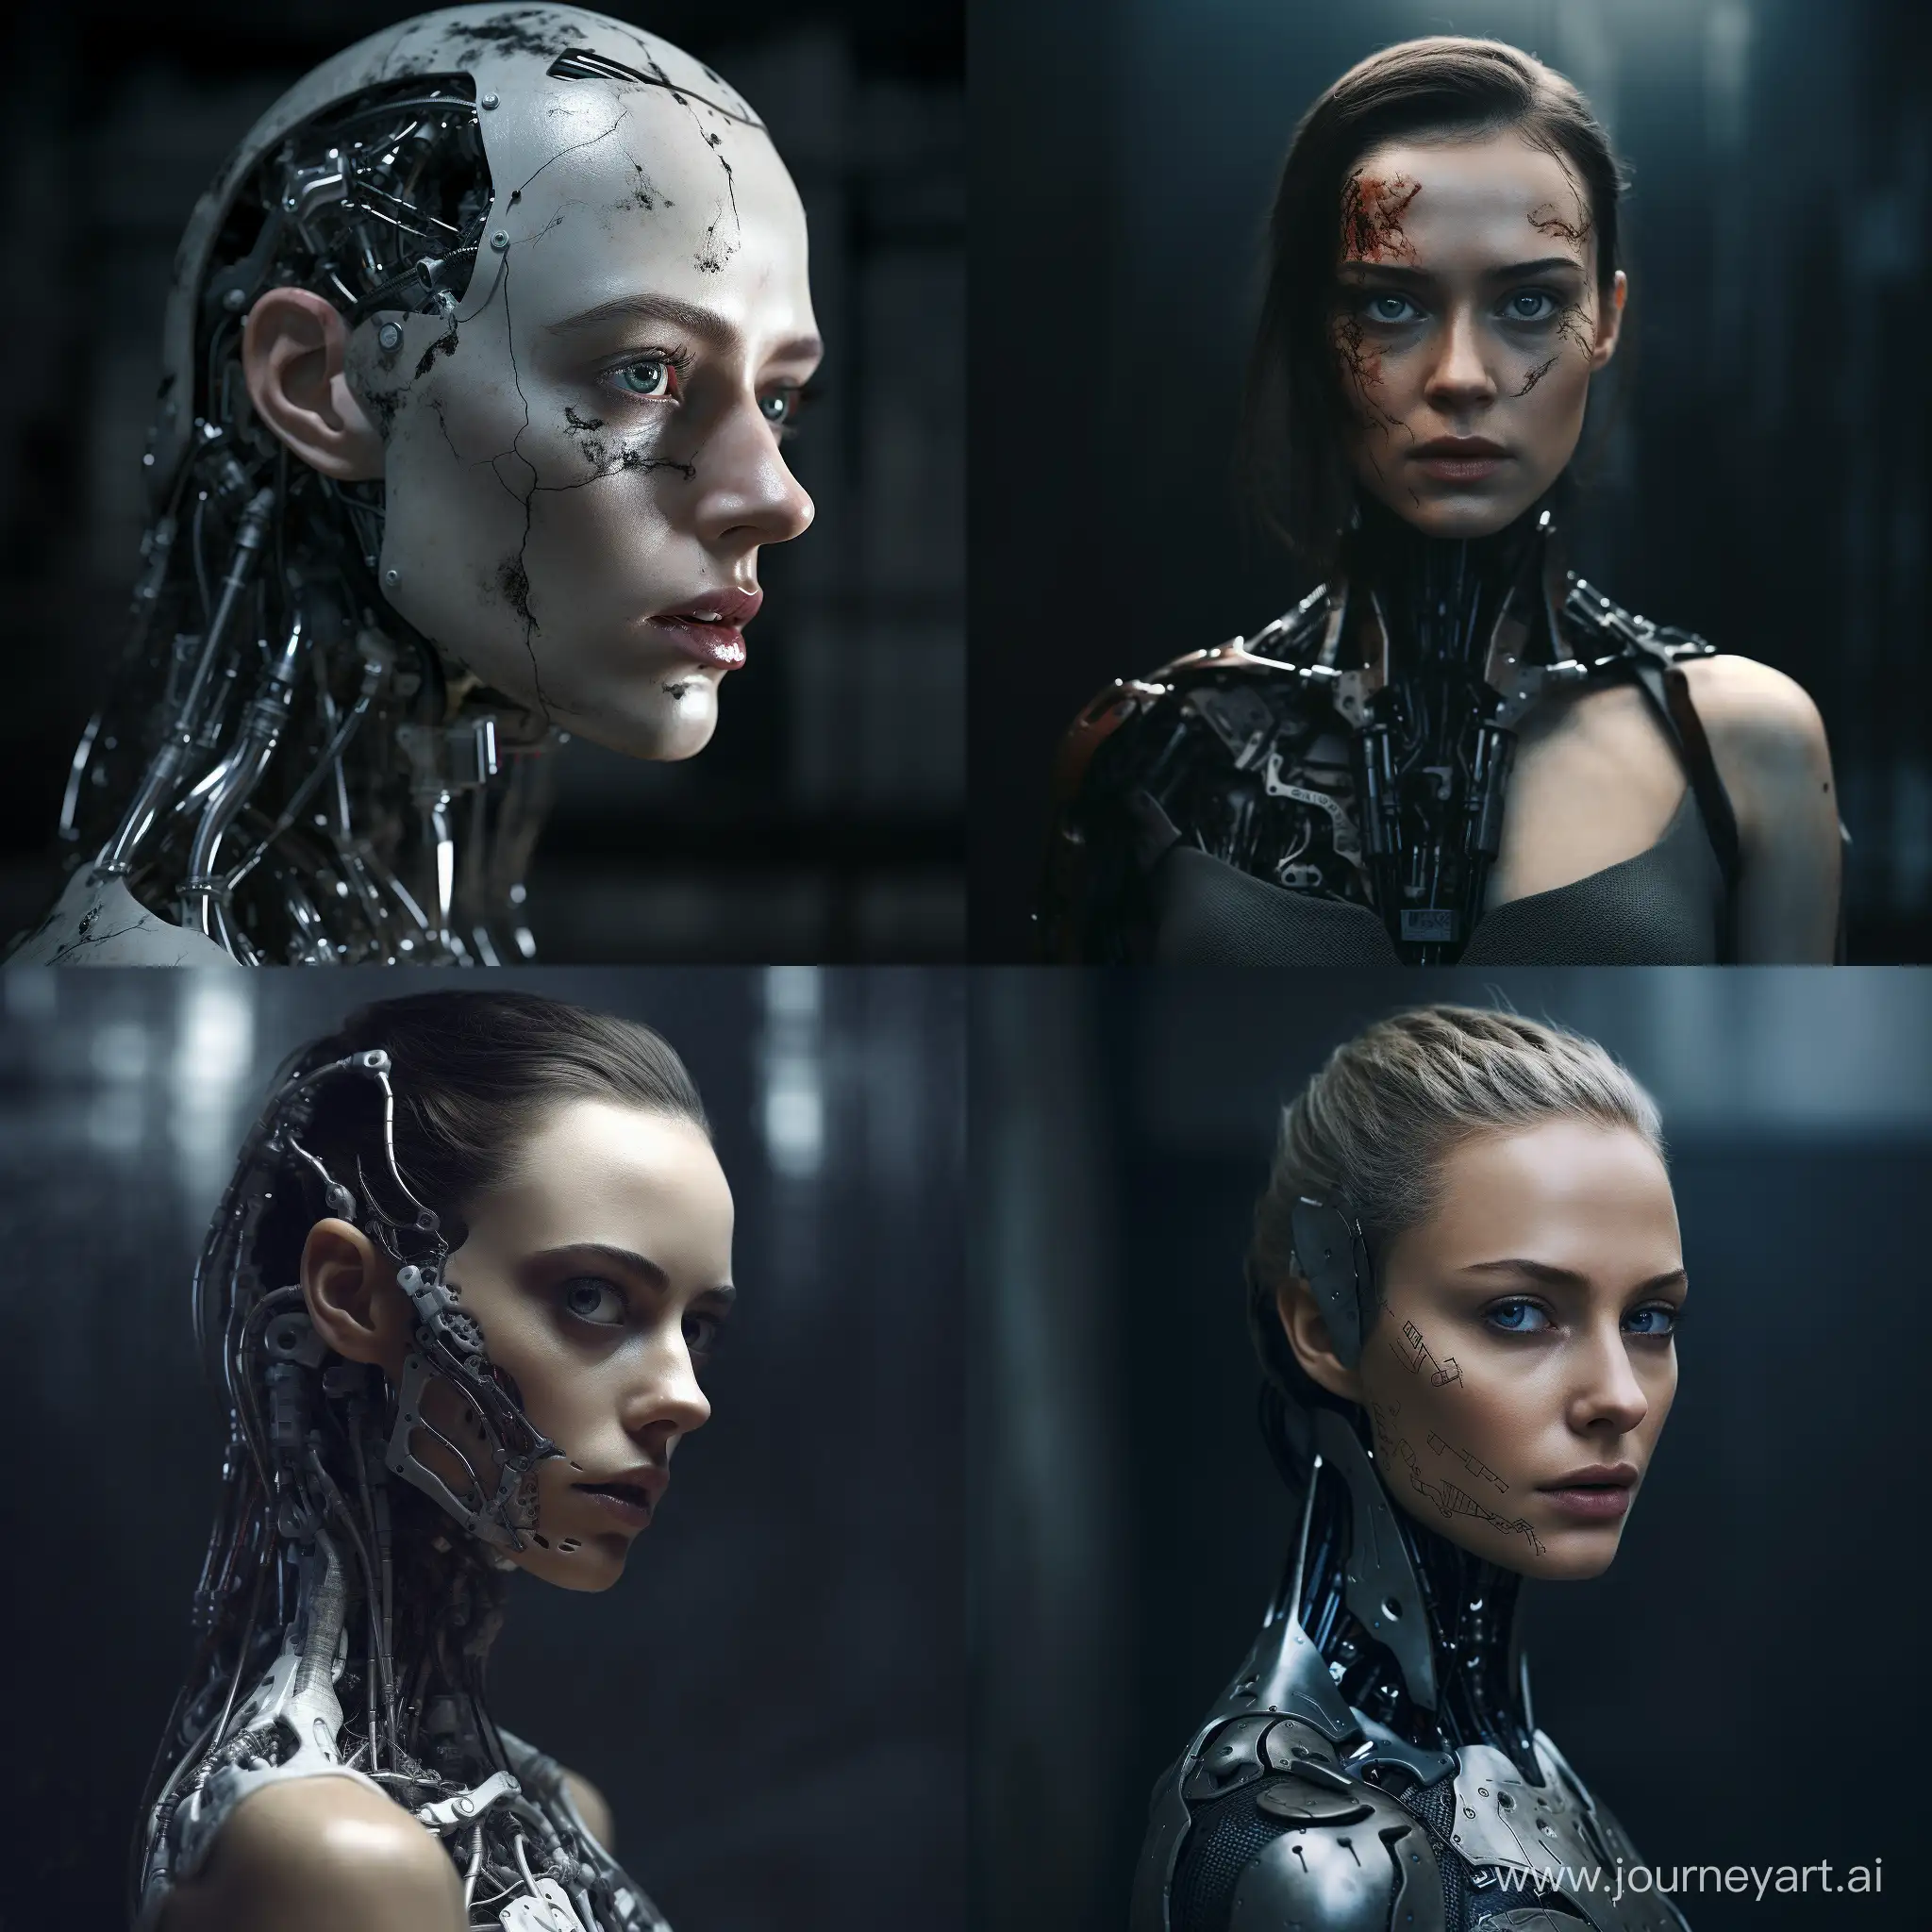 Futuristic-HumanLike-Robot-Portrait-with-Intense-Gaze